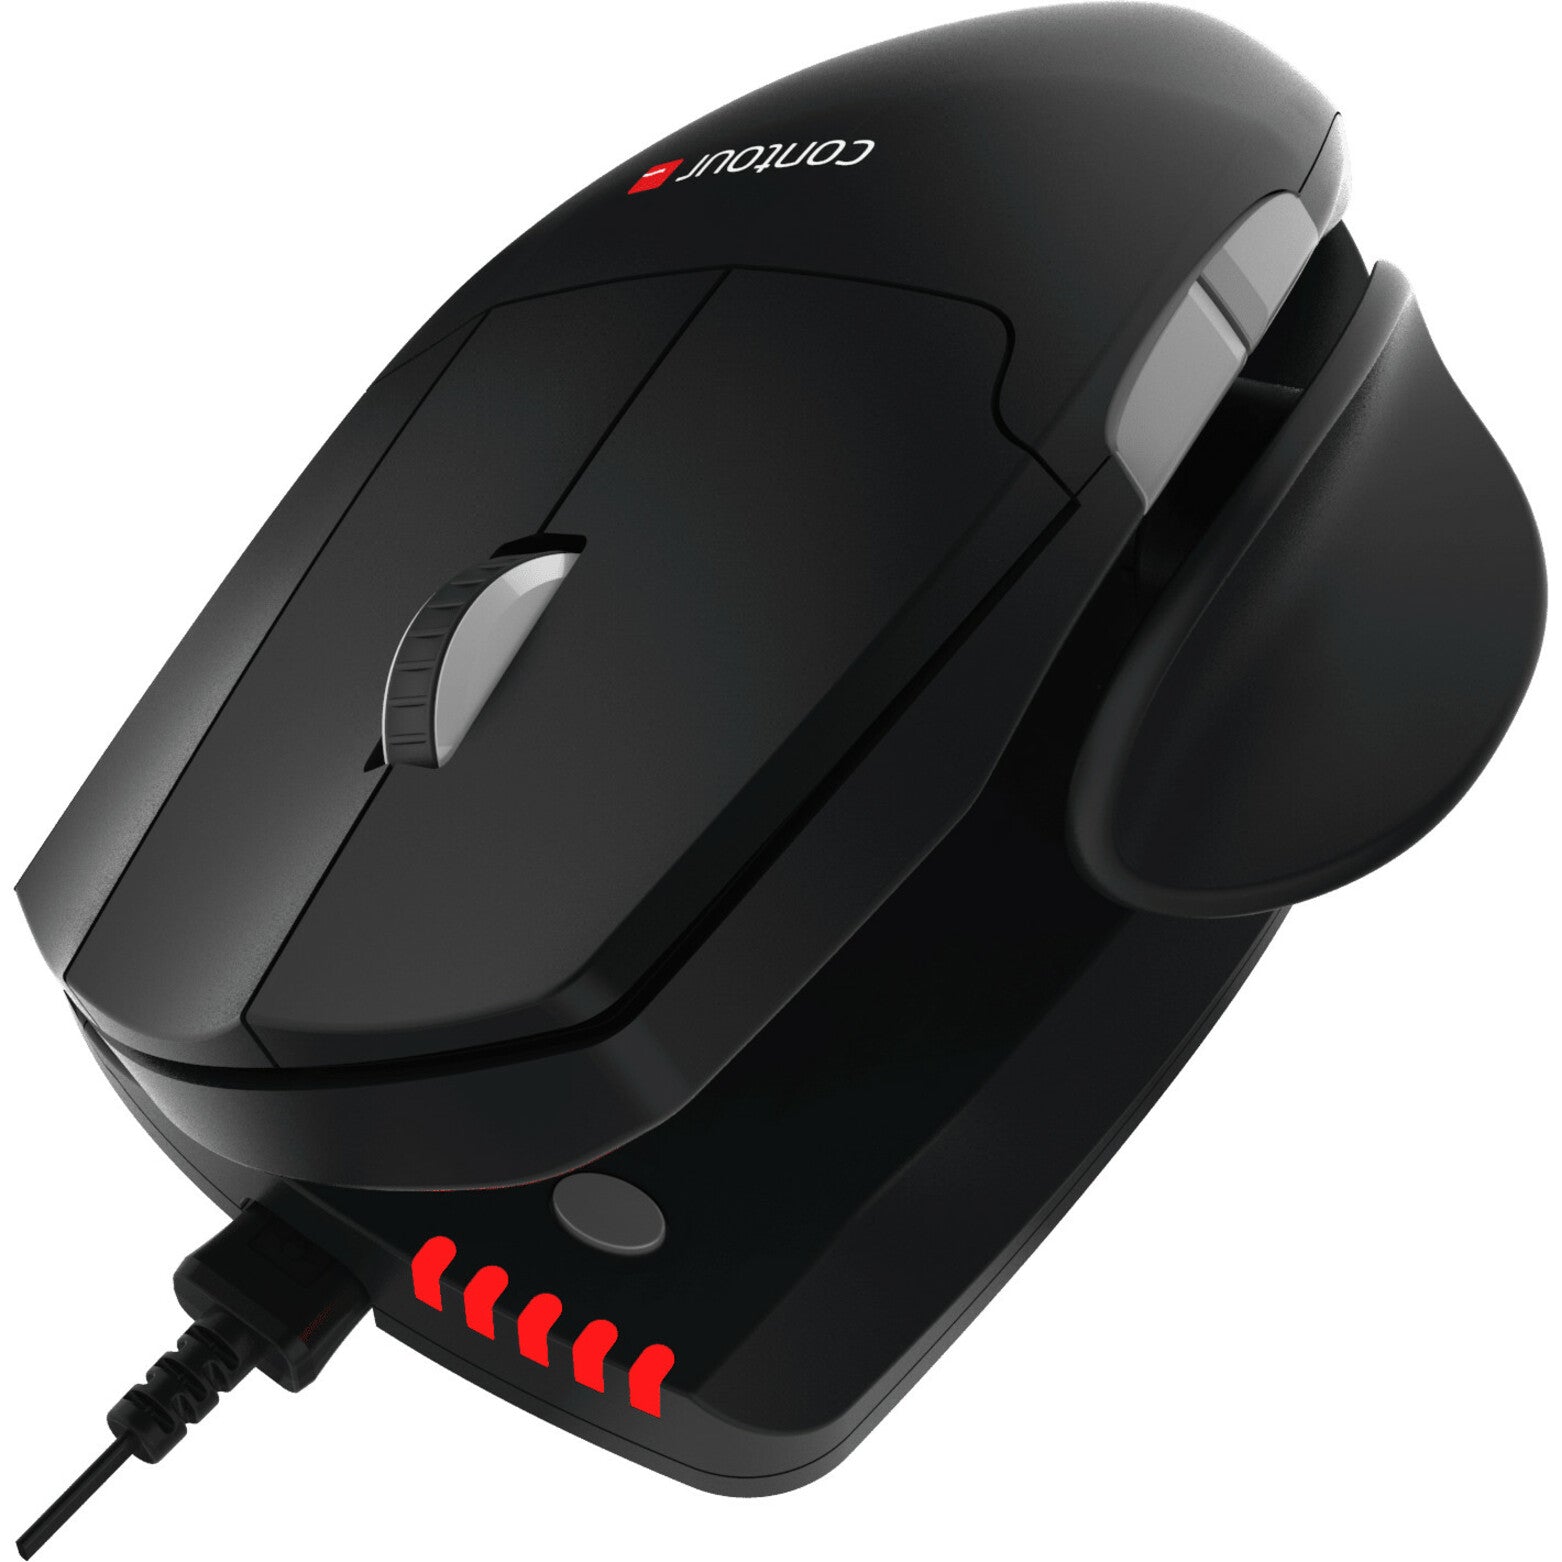 Contour Unimouse Unimouse-WL Ergonomic Wireless Mouse, 7 Buttons, 2800 DPI